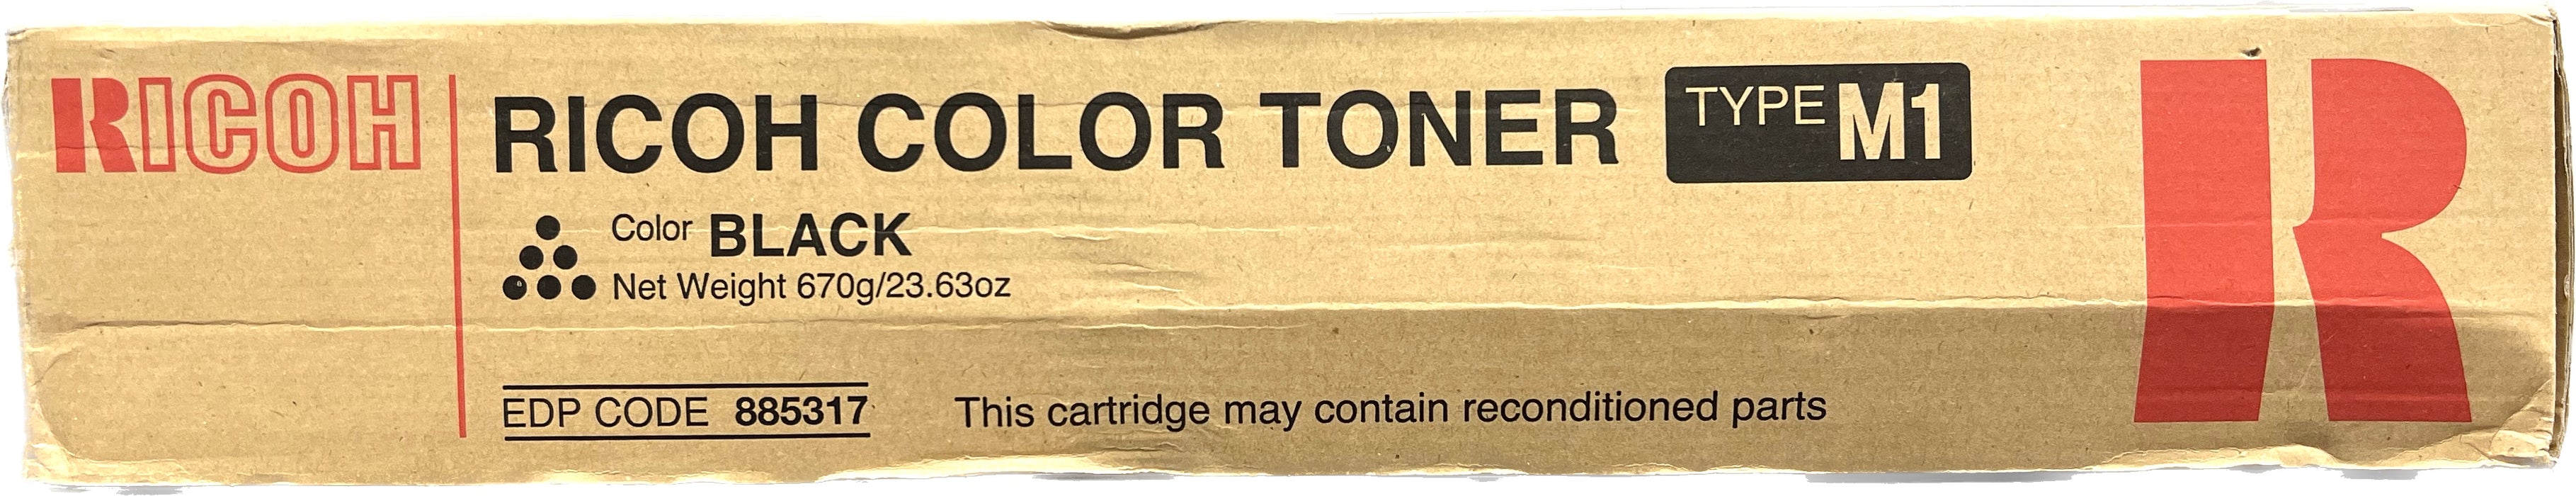 Genuine Ricoh Black Color Toner | 885317 | Type M1